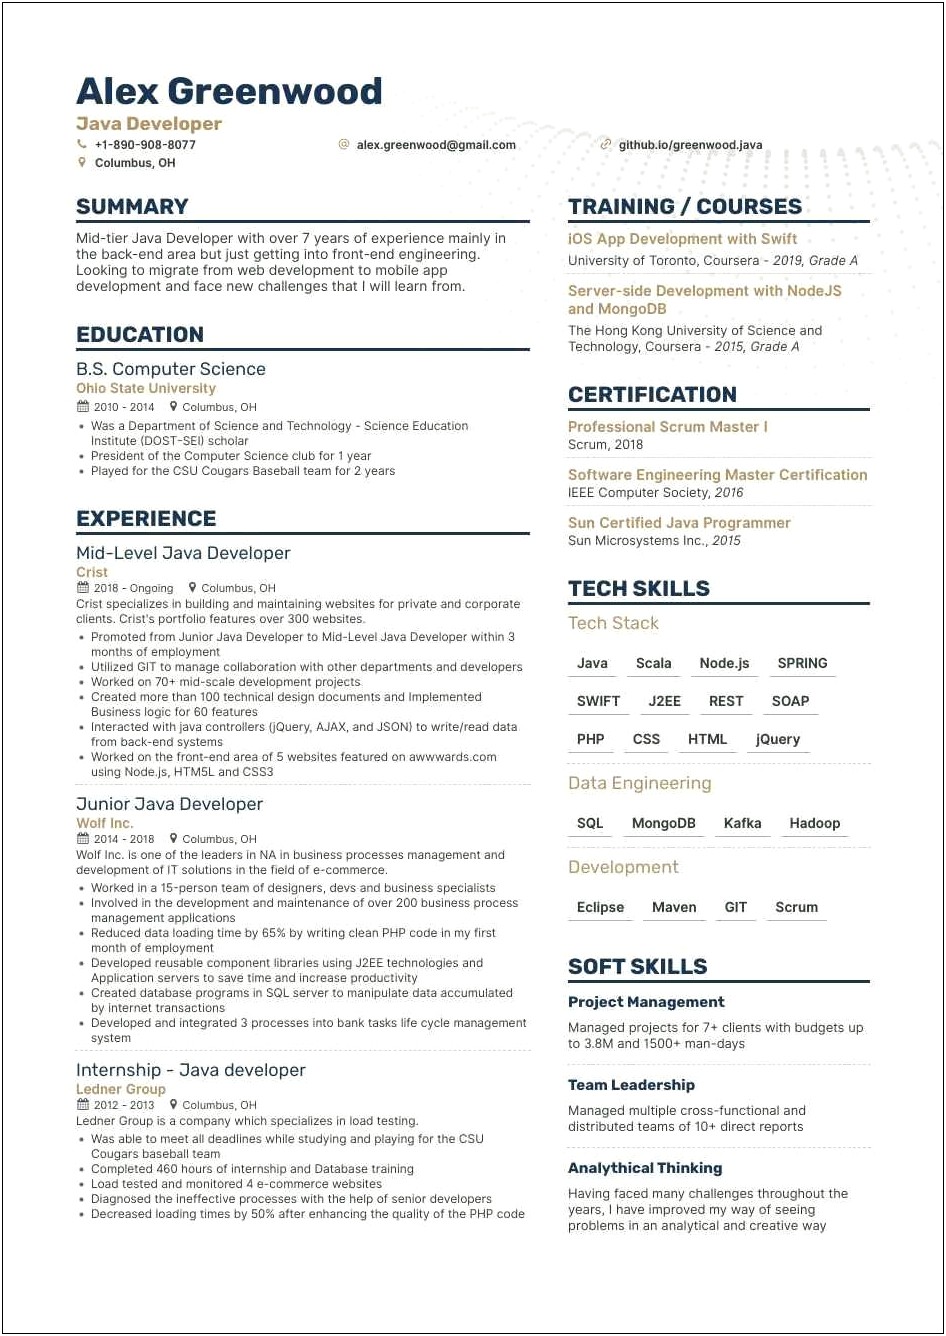 Technical Java Trainer Job Description For Resume